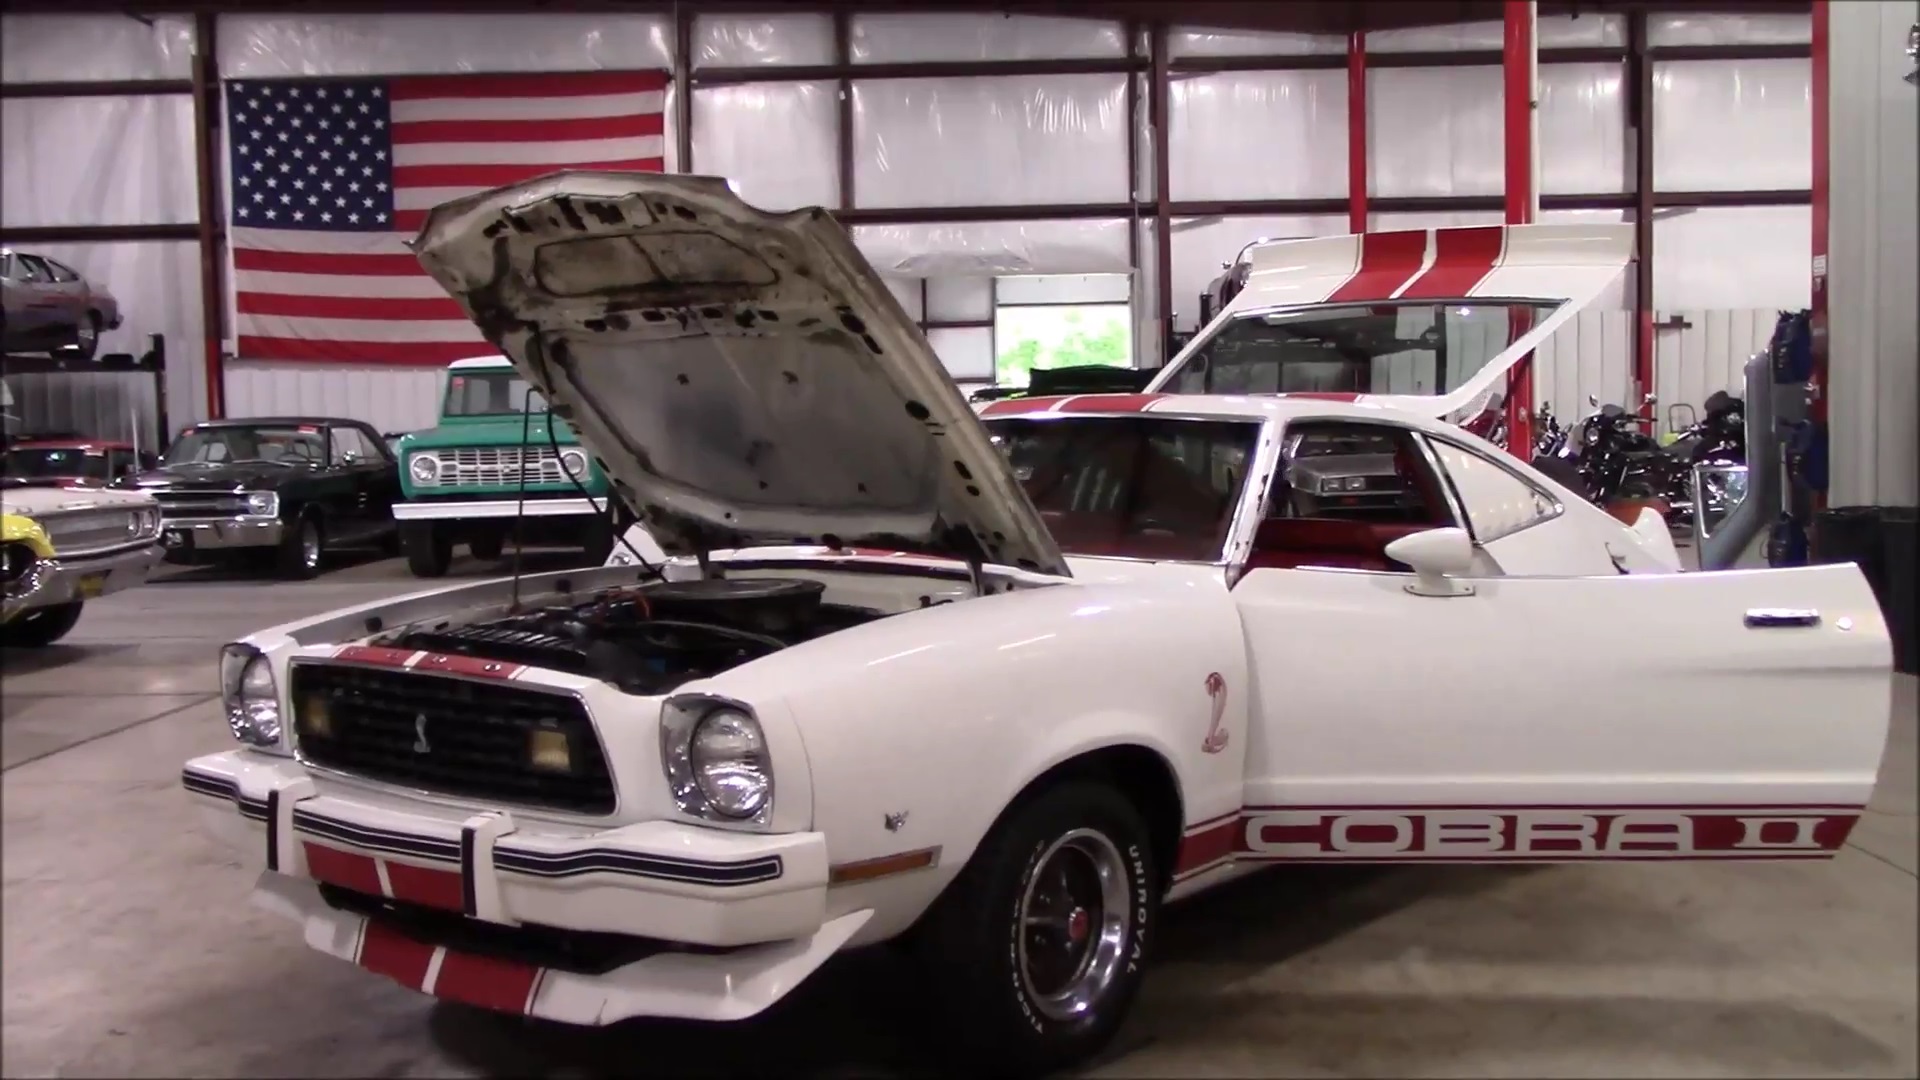 Video: 1977 Ford Mustang Cobra II Walkaround